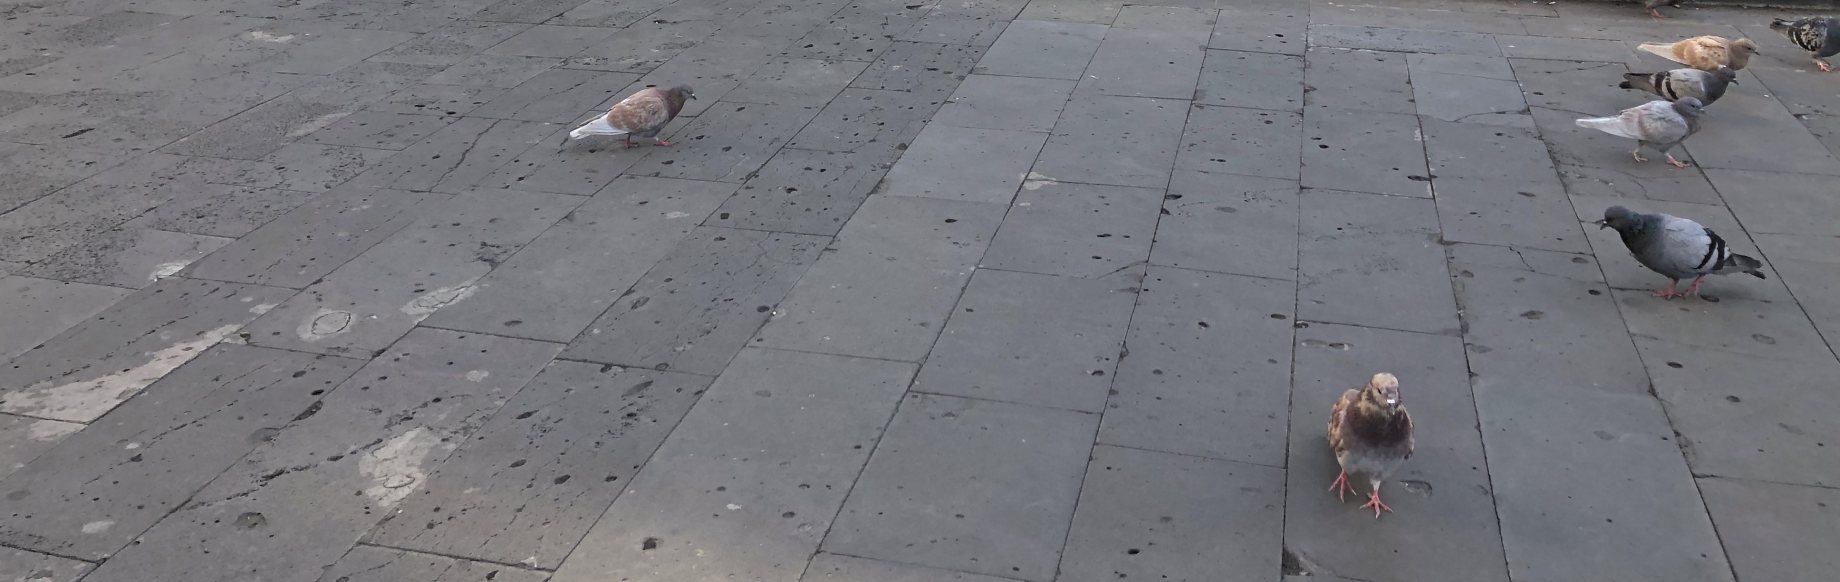 A flock of pigeons line the sidewalk below the Cascades monument in Yerevan, Armenia.